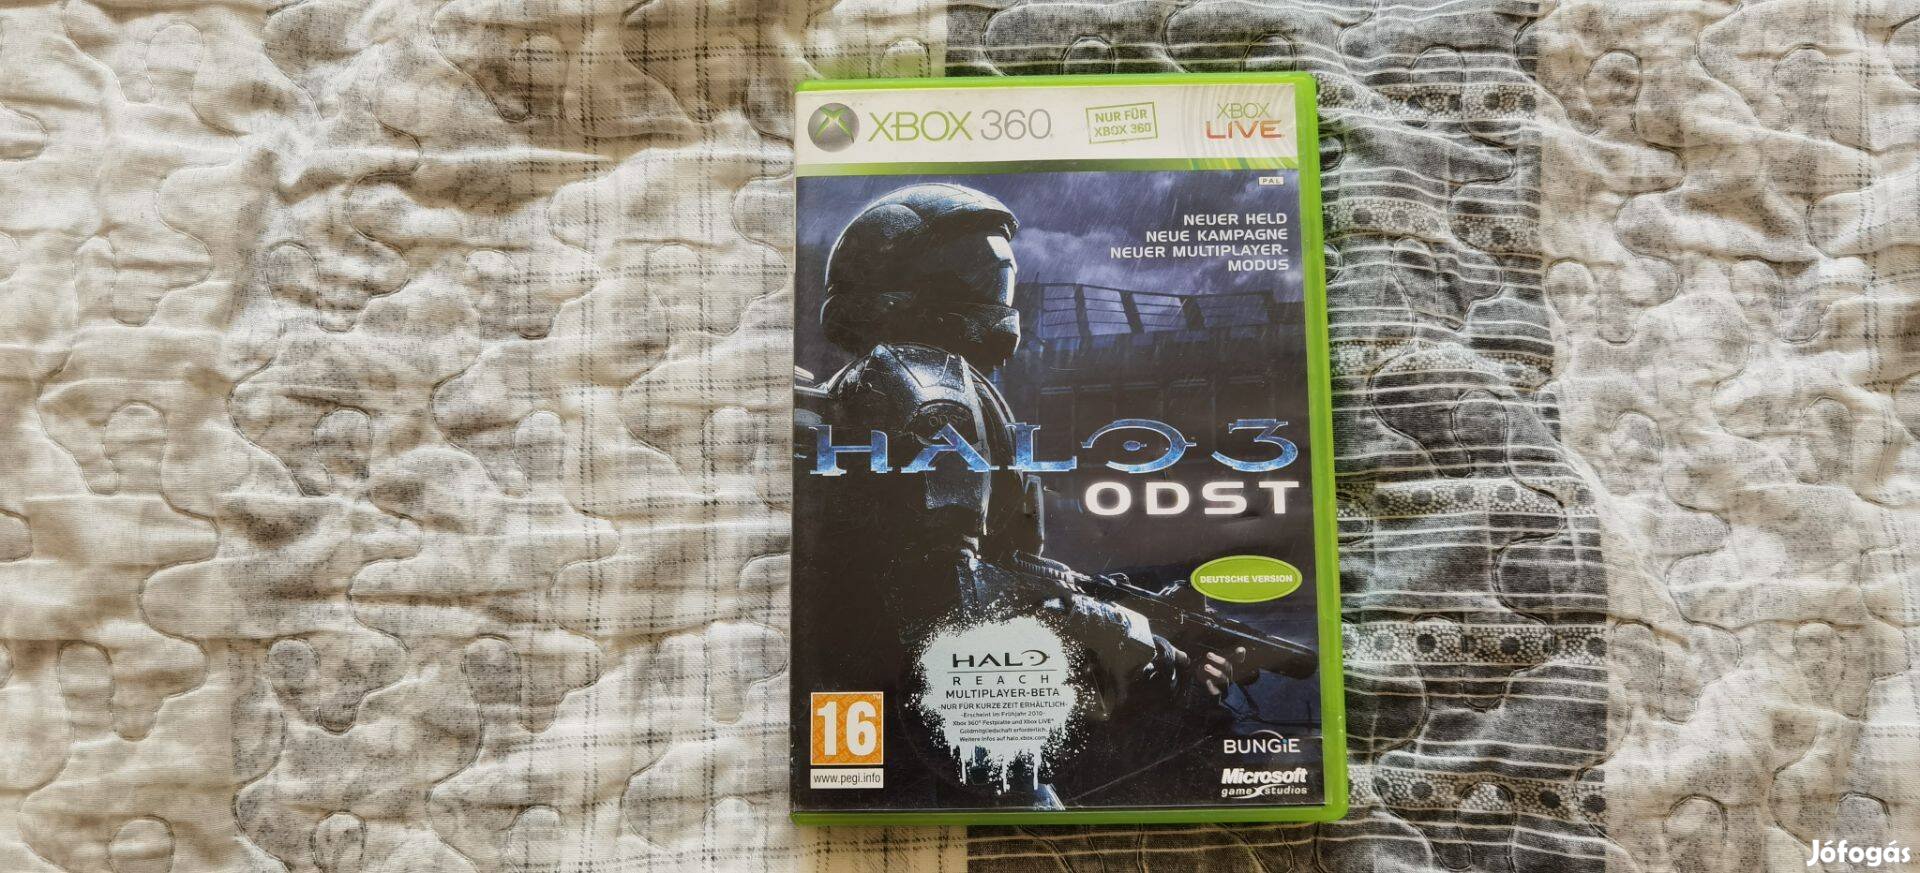 Halo 3 odst eredeti xbox 360 játék multiplayer